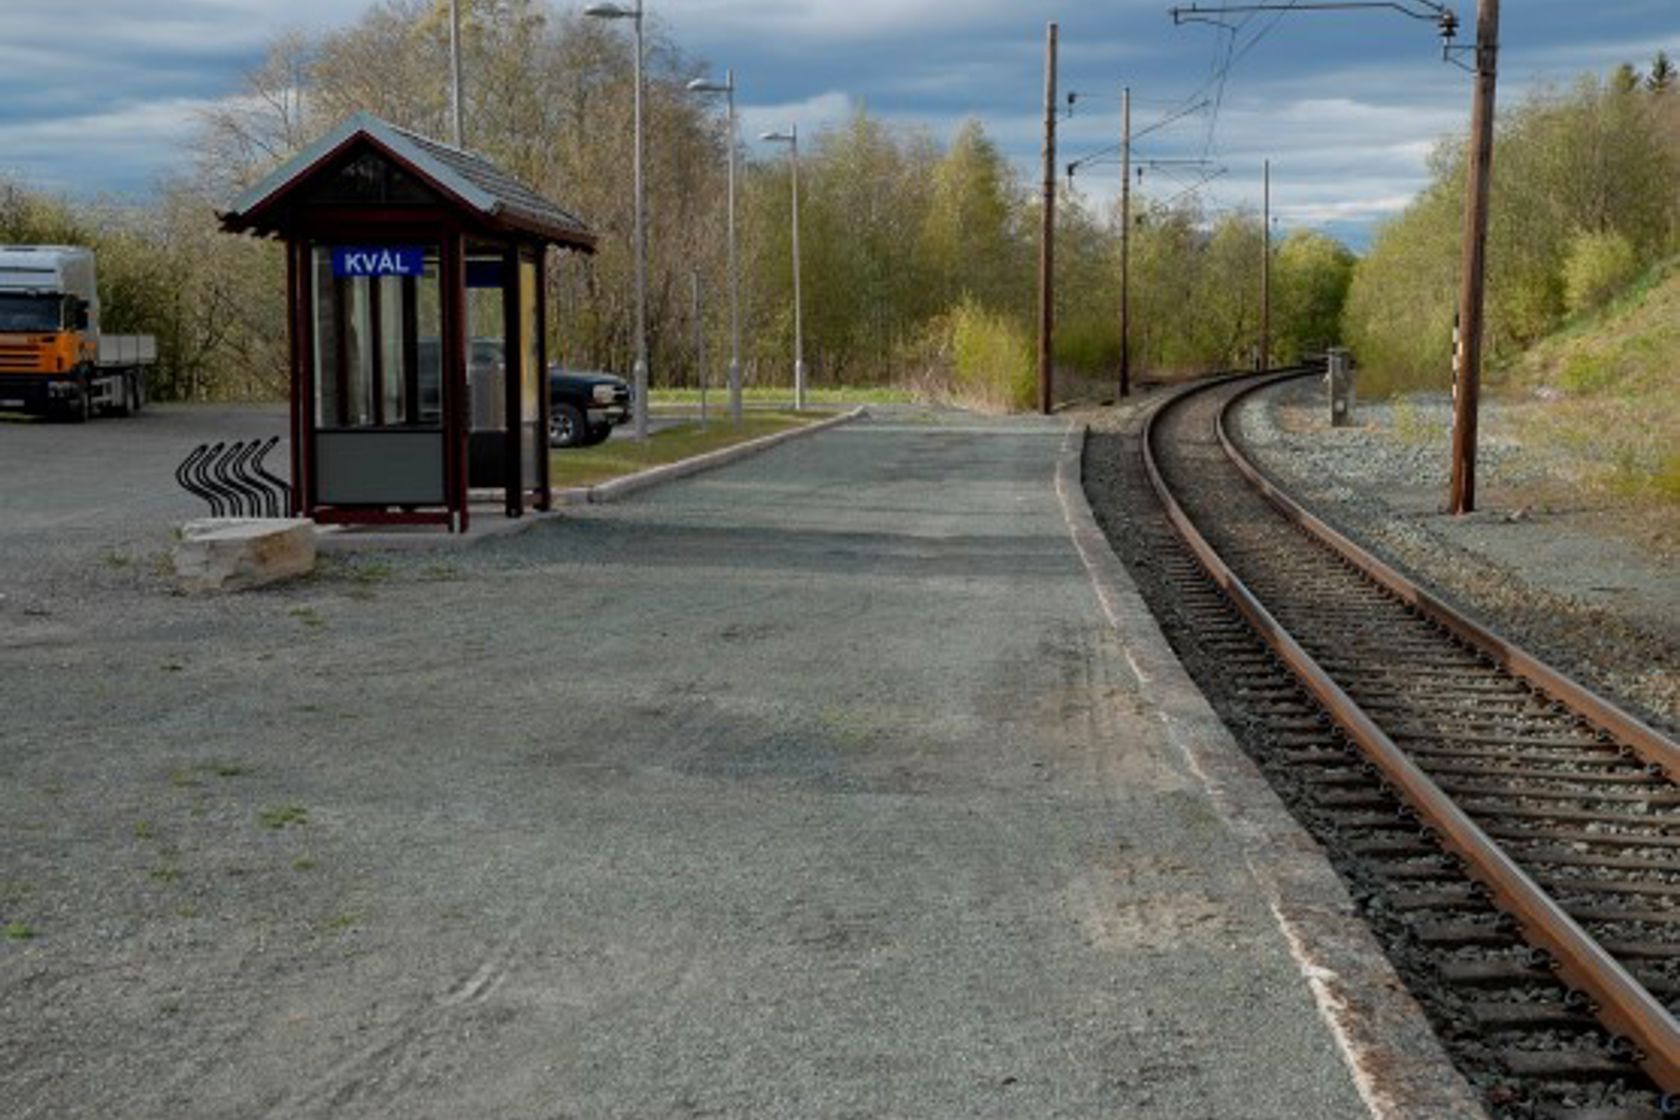 Exterior view of Kvål stop